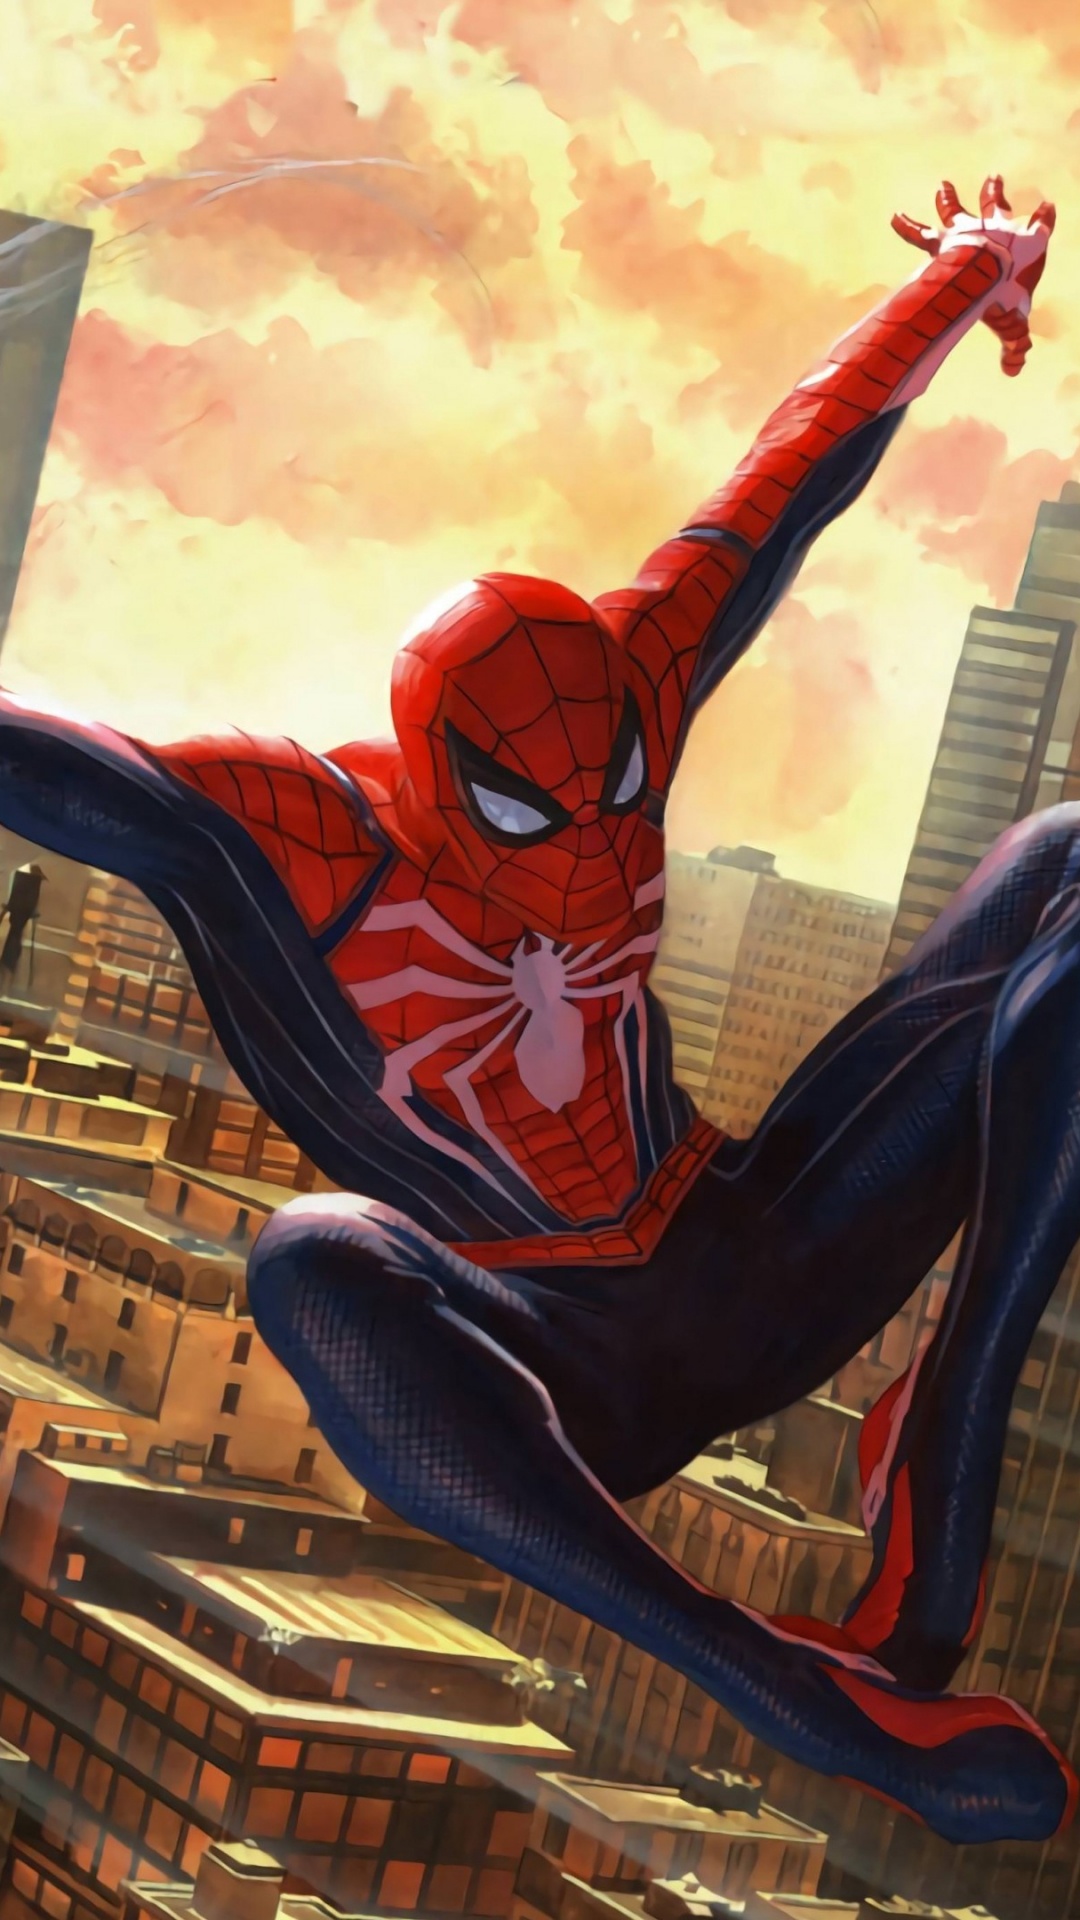 Spider-man, Superhero, Adventure Game, pc Game, Illustration. Wallpaper in 1080x1920 Resolution